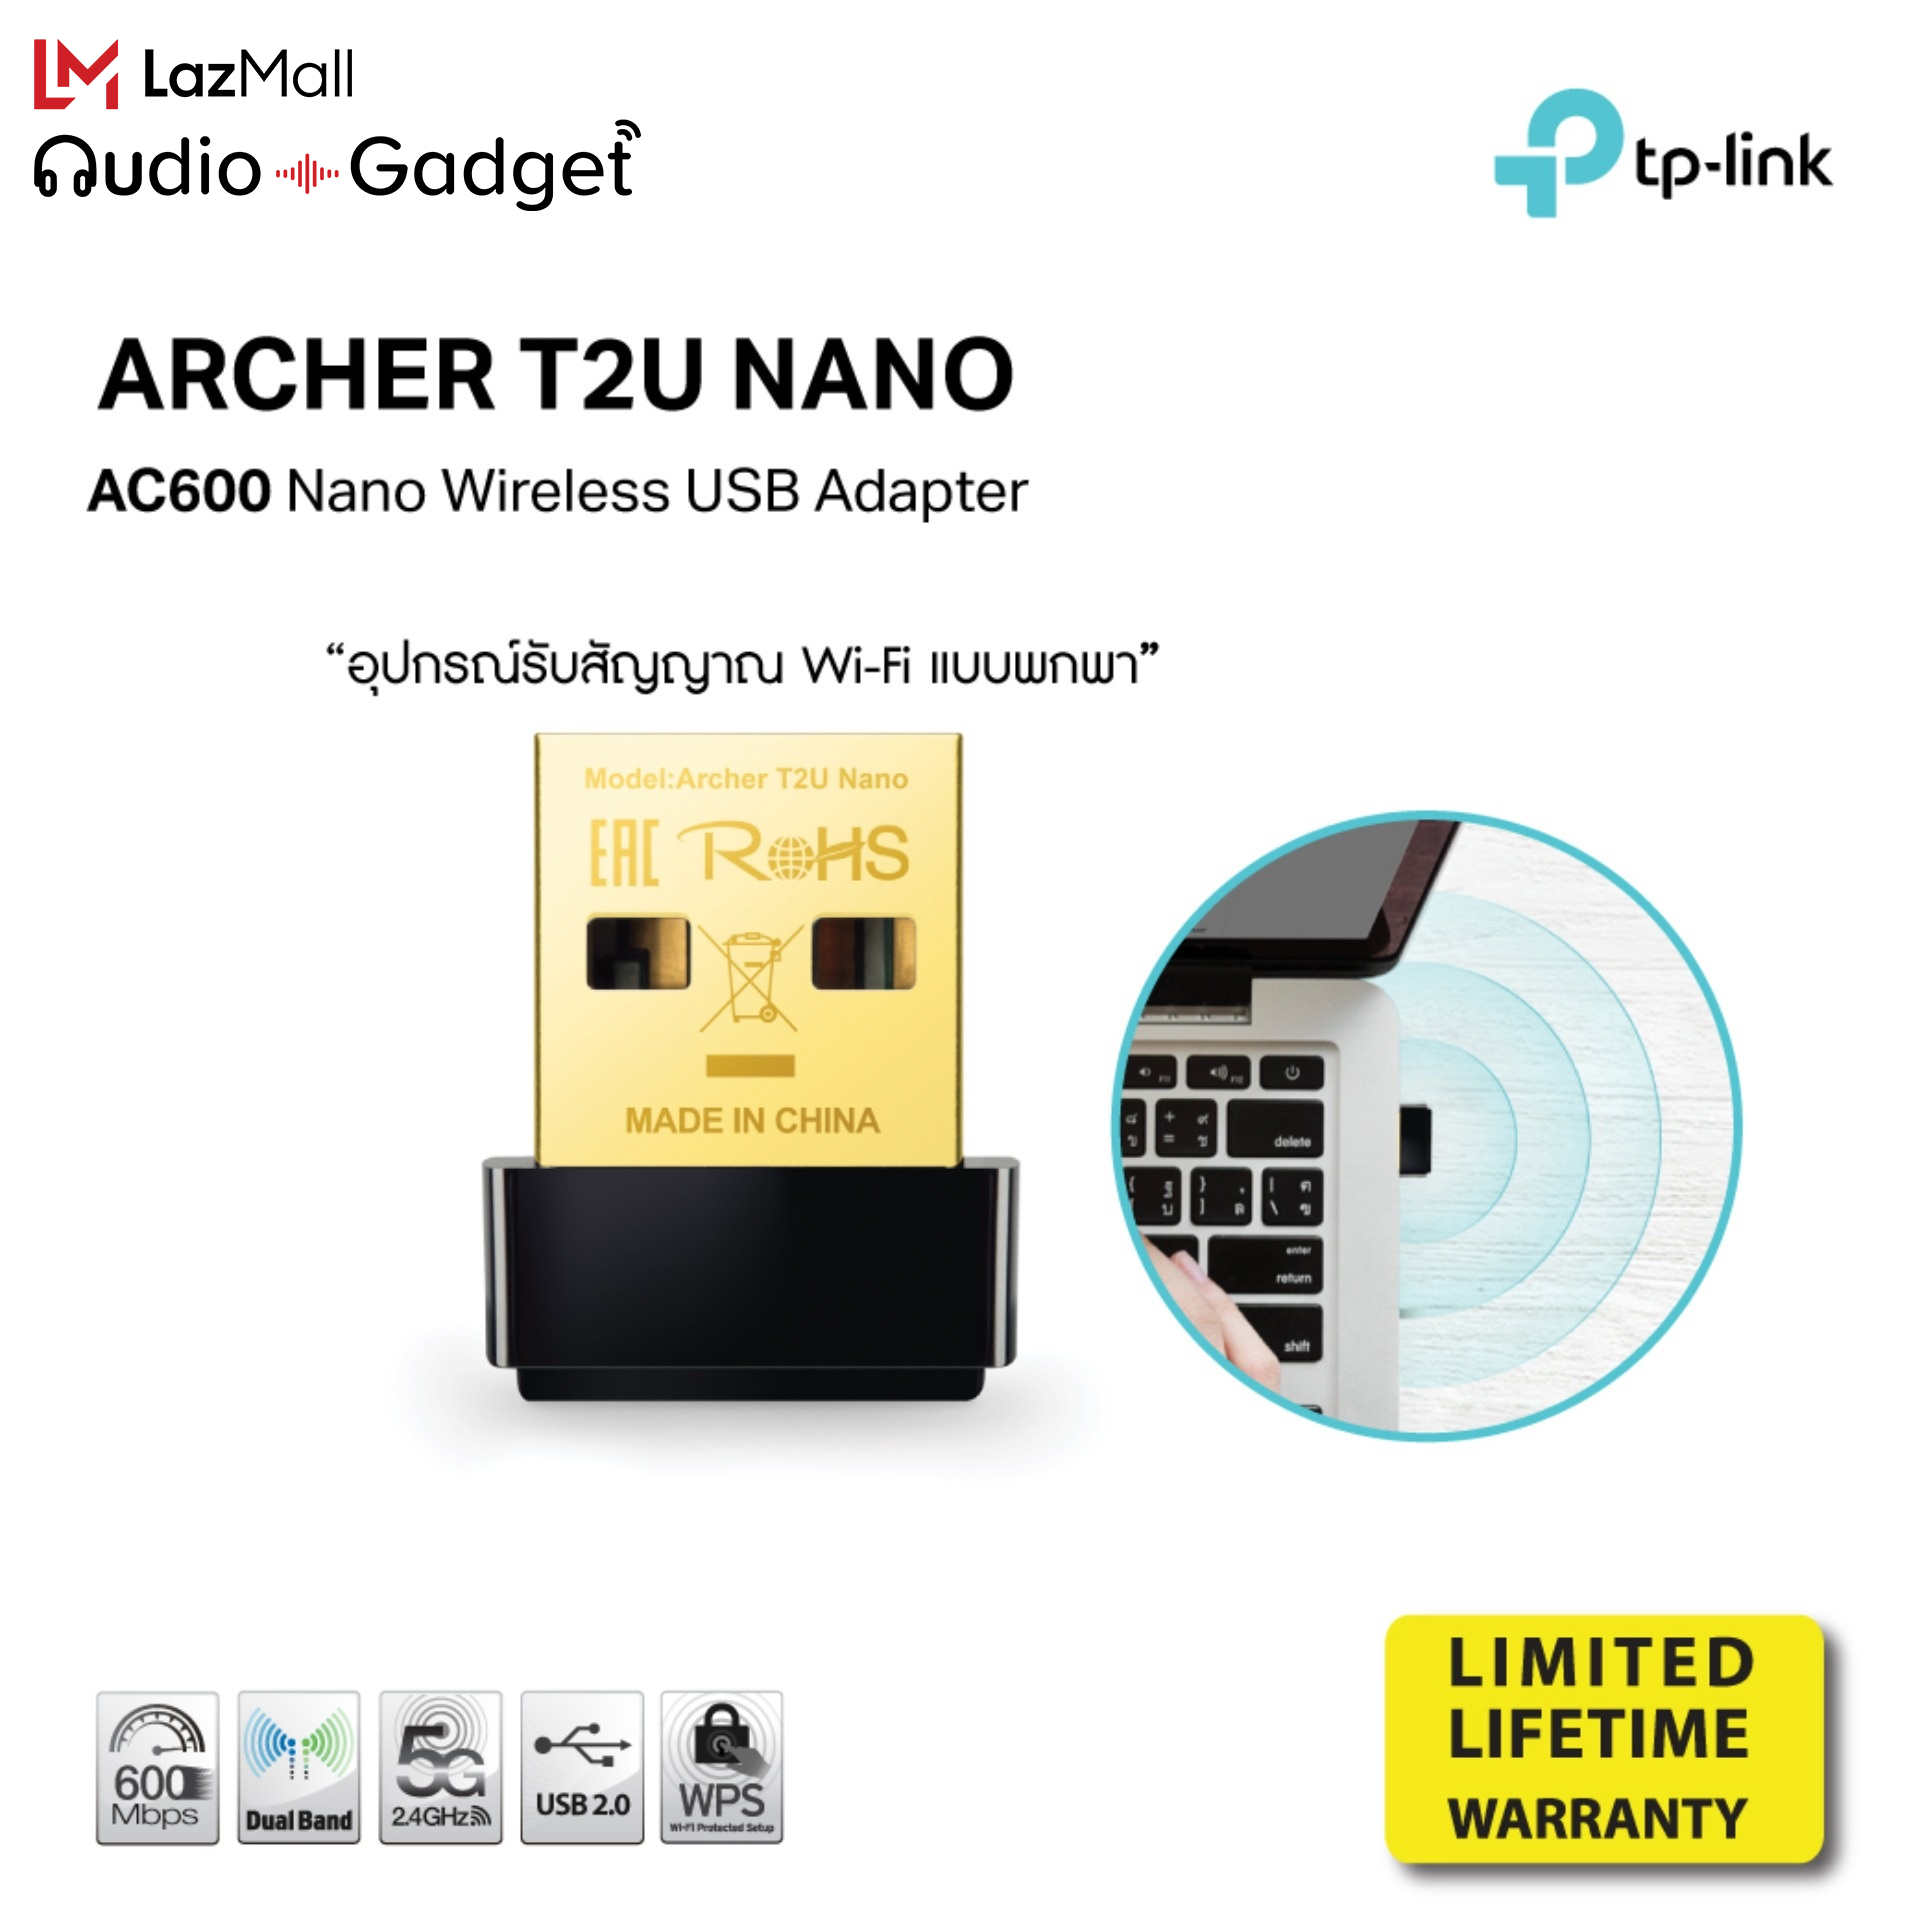 TP-Link Archer T2U Nano ตัวรับสัญญาณ Wi-Fi ใช้กับโน๊ตบุ๊คหรือPC ( AC600 Nano Wireless USB Adapter ) อุปกรณ์เน็ตเวิร์ค